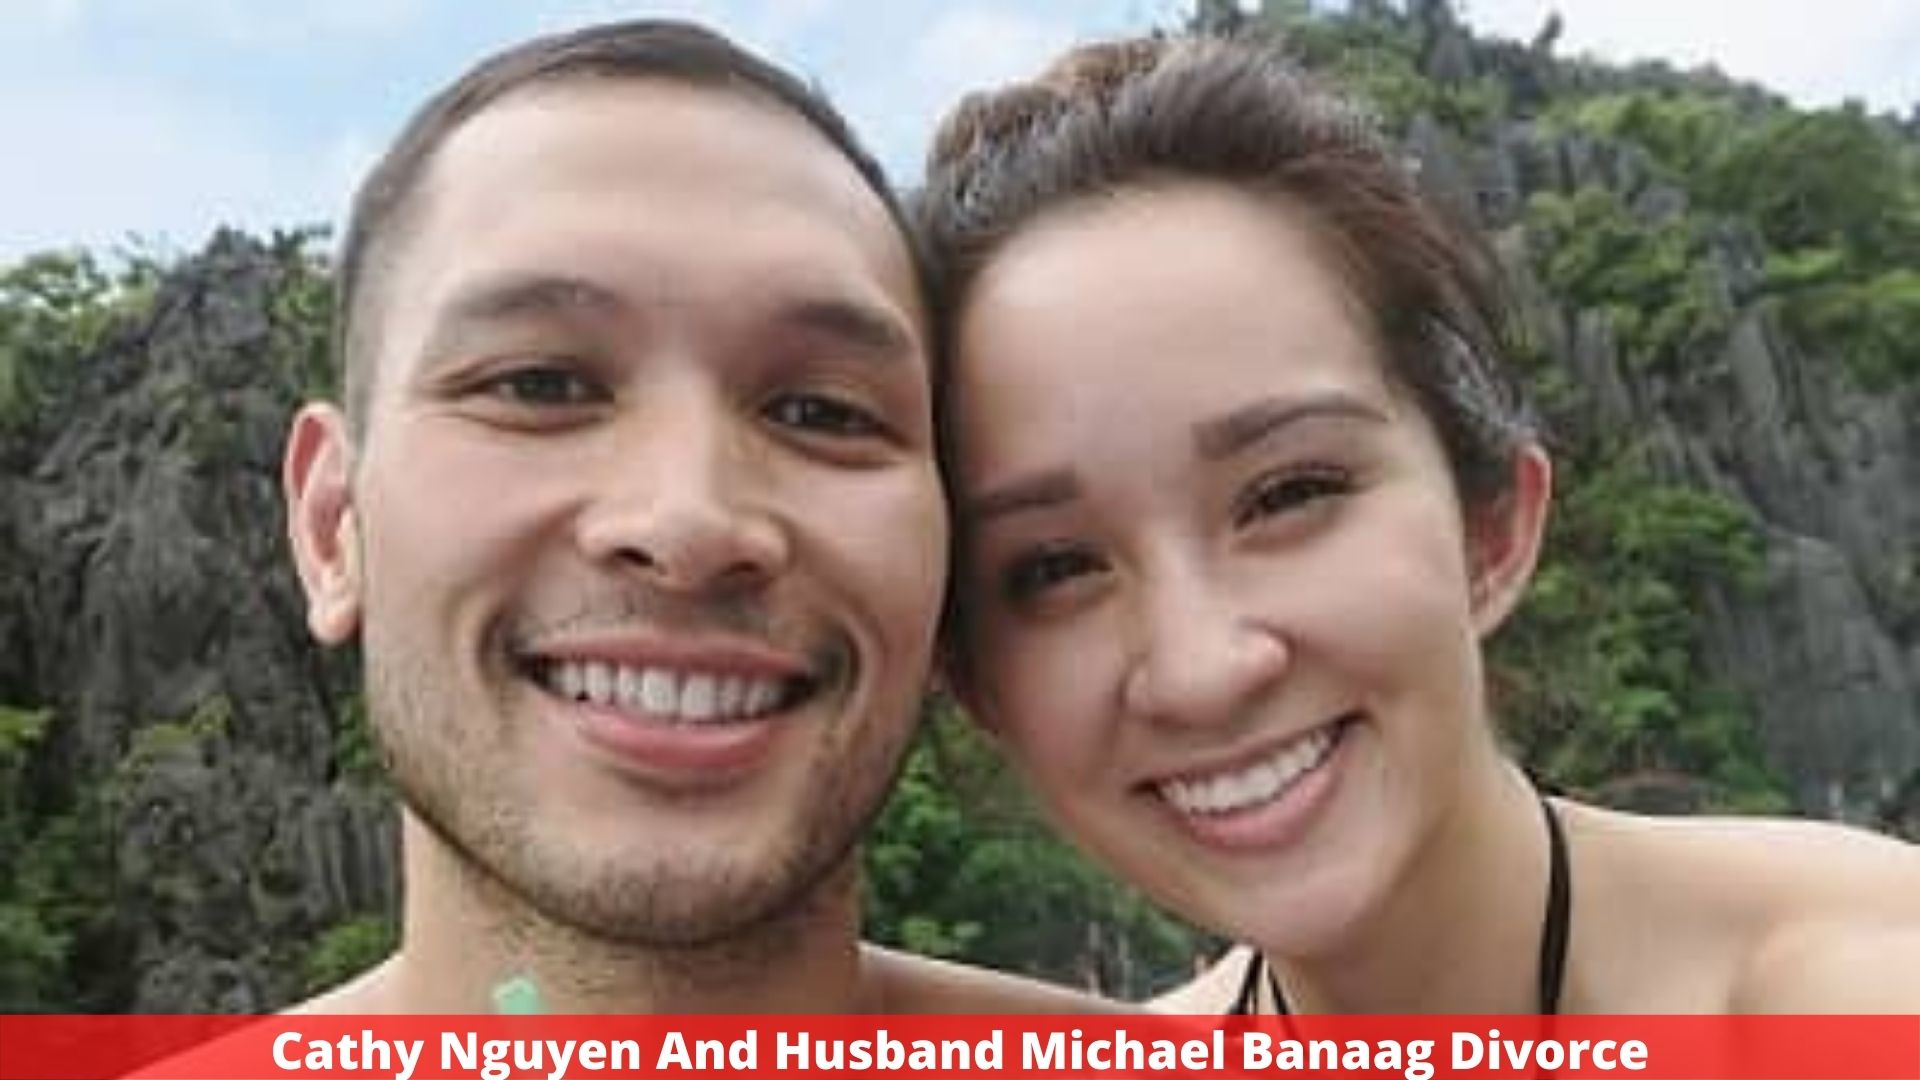 Cathy Nguyen And Husband Michael Banaag Divorce: